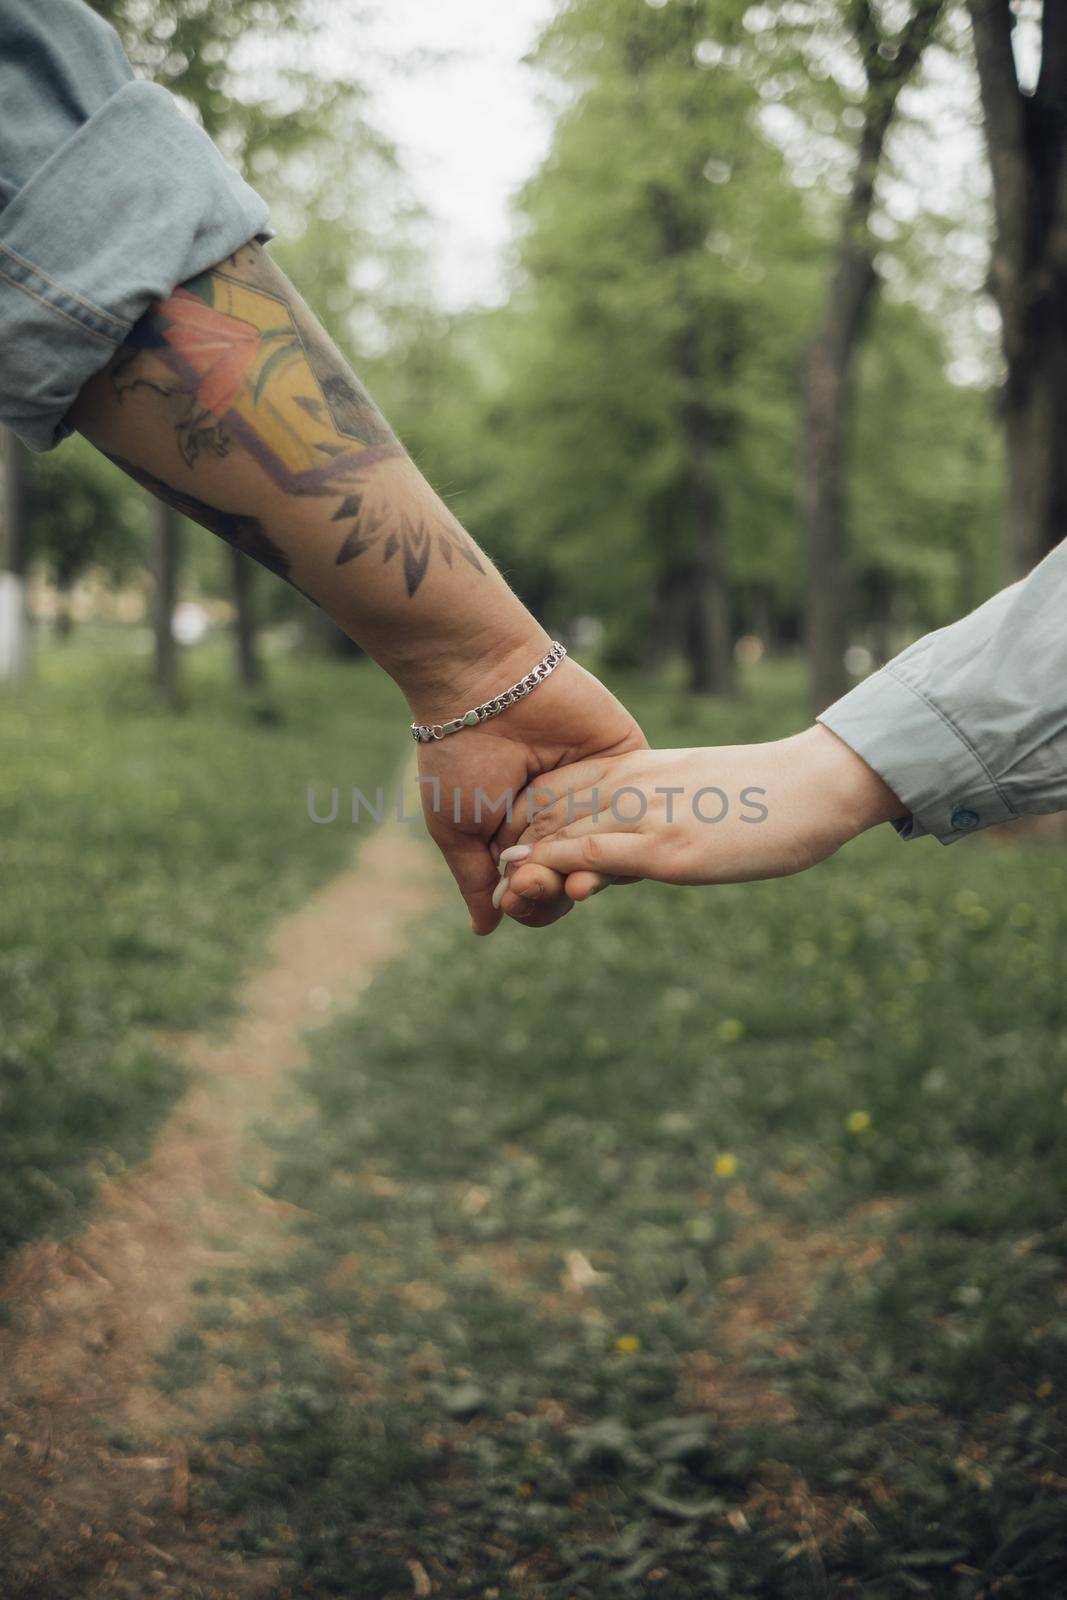 loving couple walking in ukrainian park and city